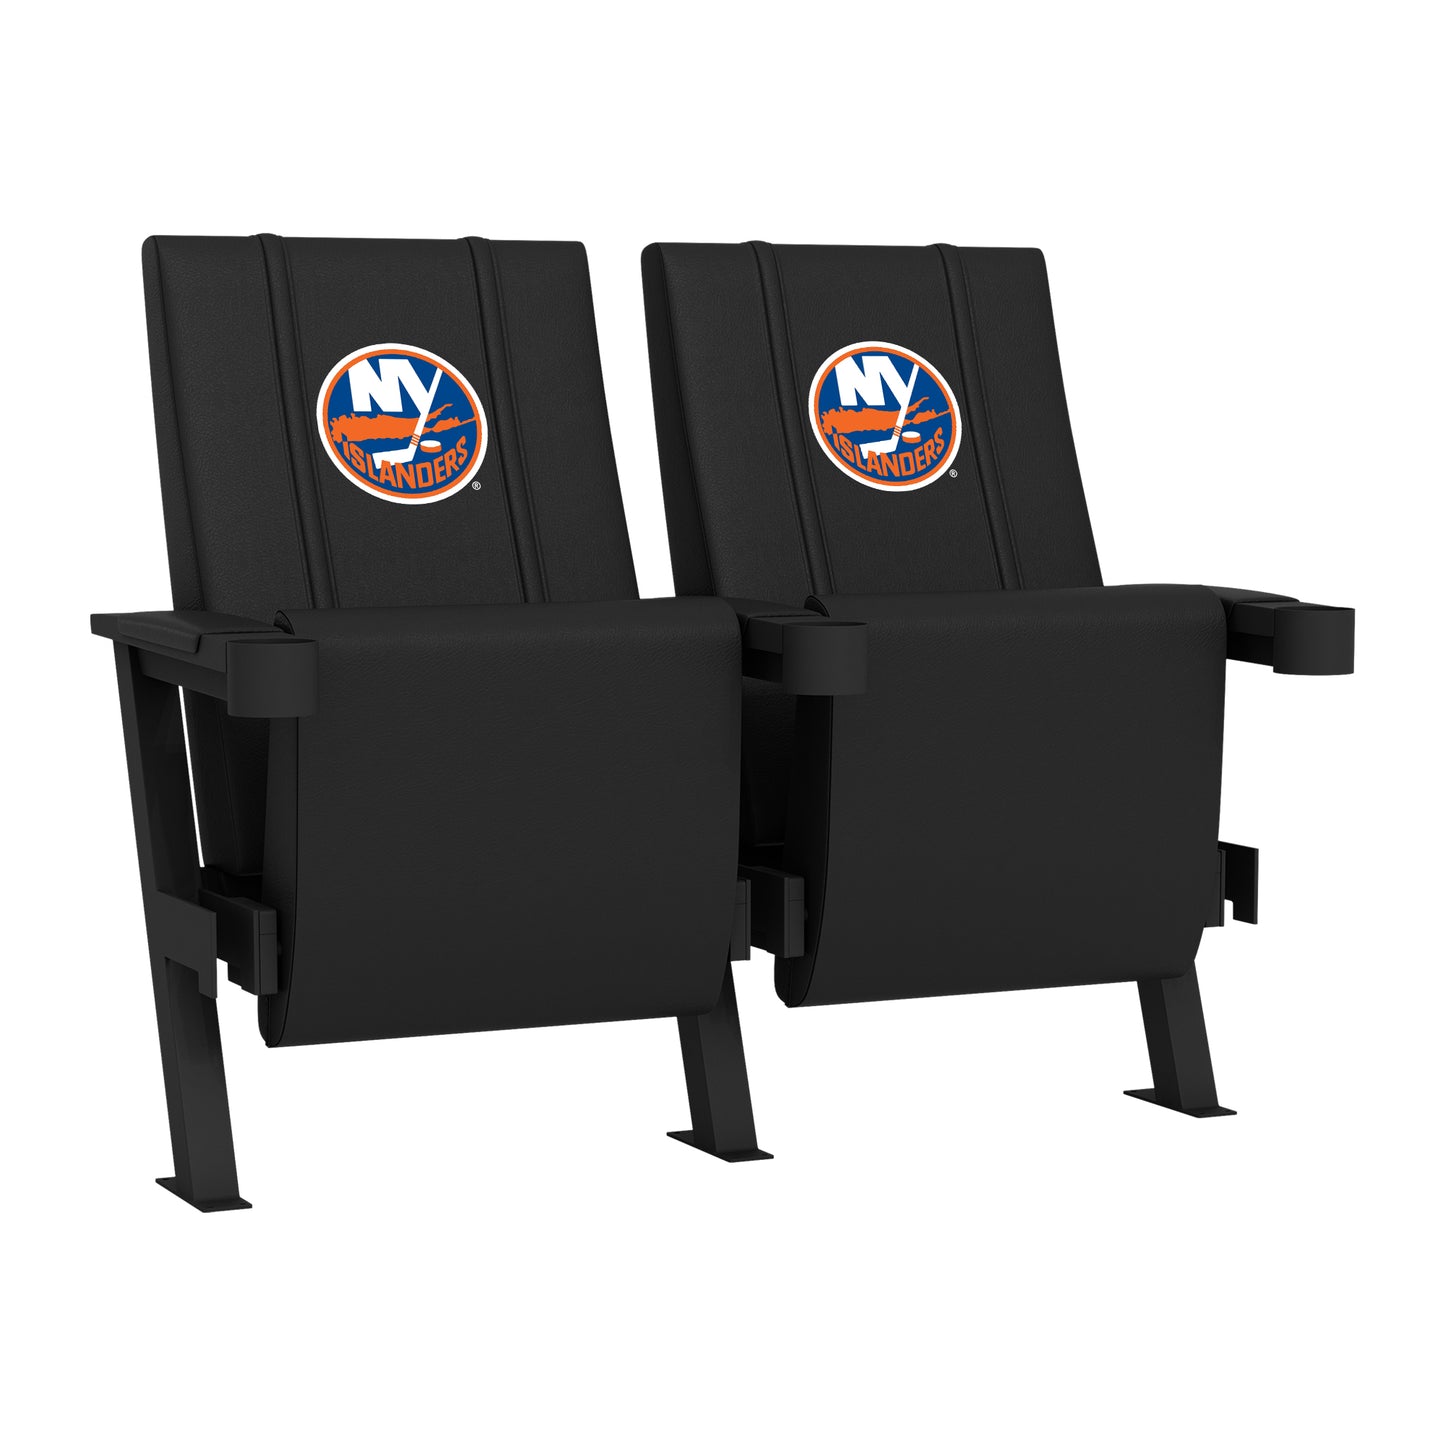 SuiteMax 3.5 VIP Seats with New York Islanders Logo